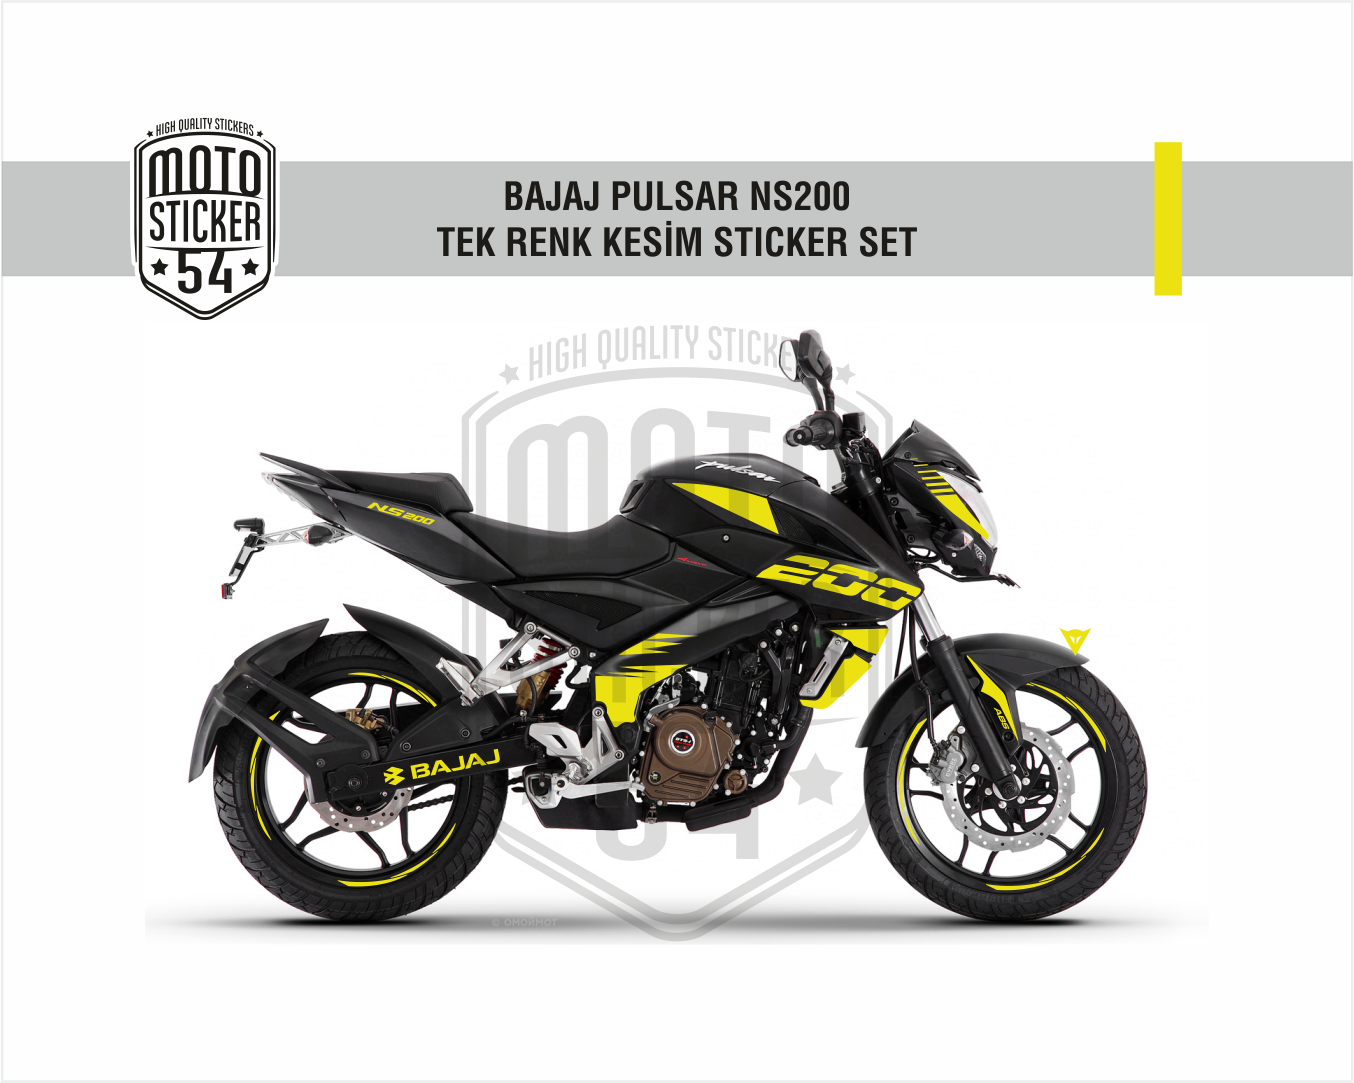 Bajaj Pulsar NS200 Tek Renk Kesim Motosiklet Sticker Set